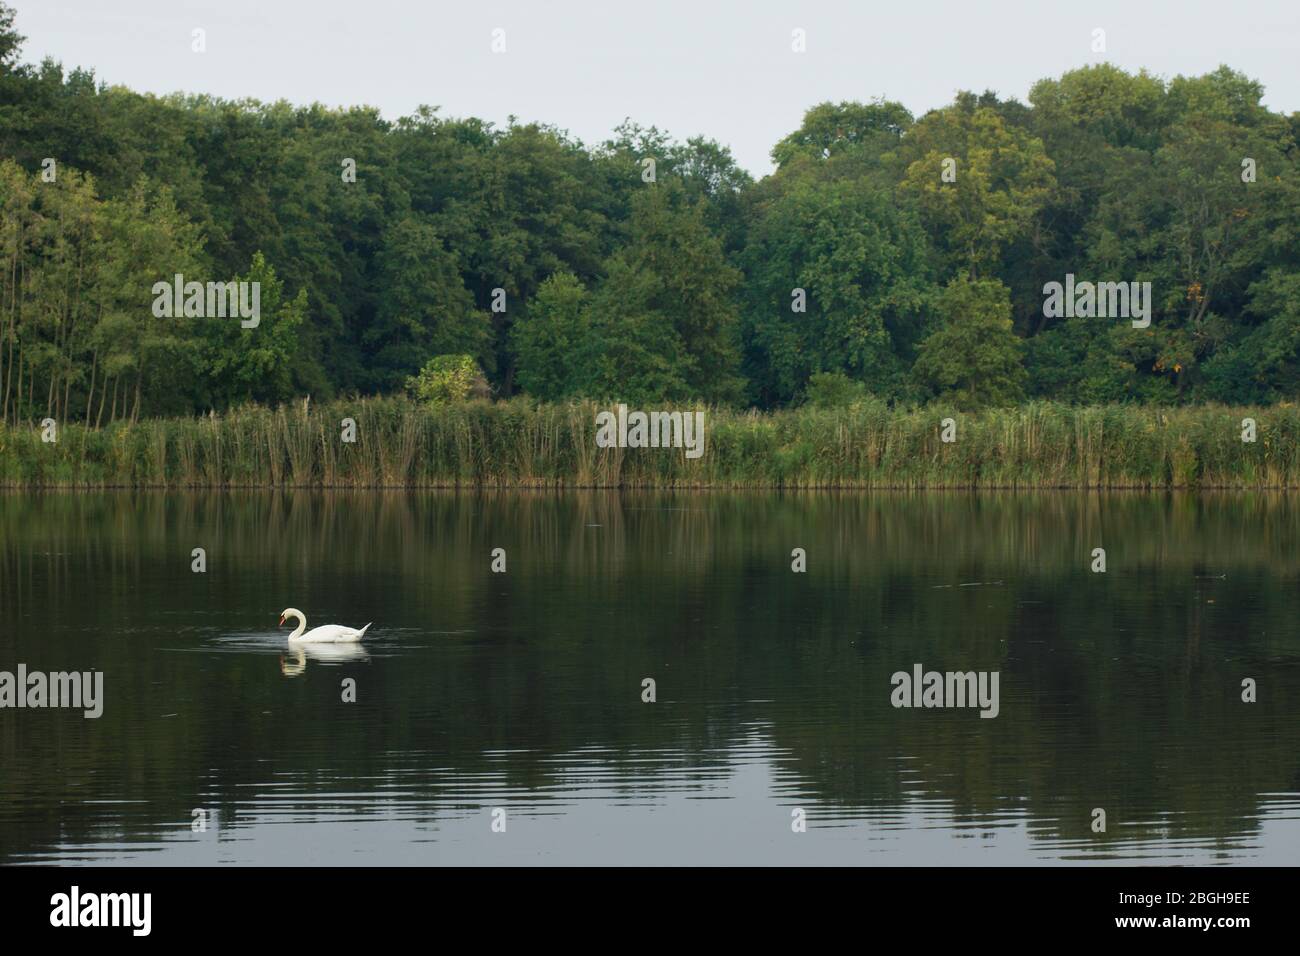 a lonley swan in a lake Stock Photo